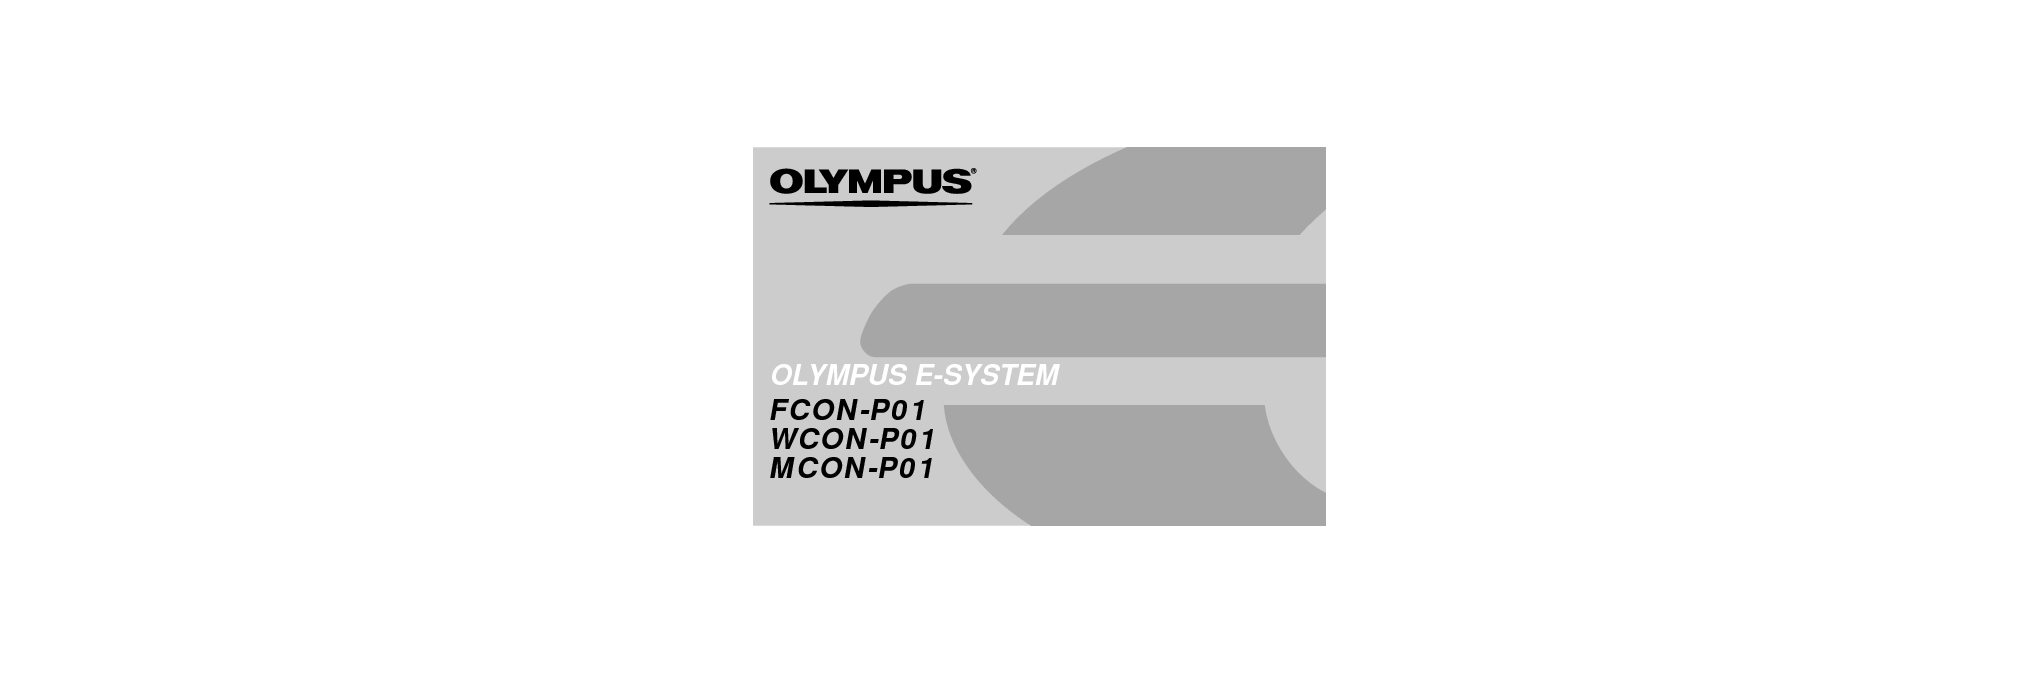 奥林巴斯 Olympus FCON-P01 使用说明书 封面